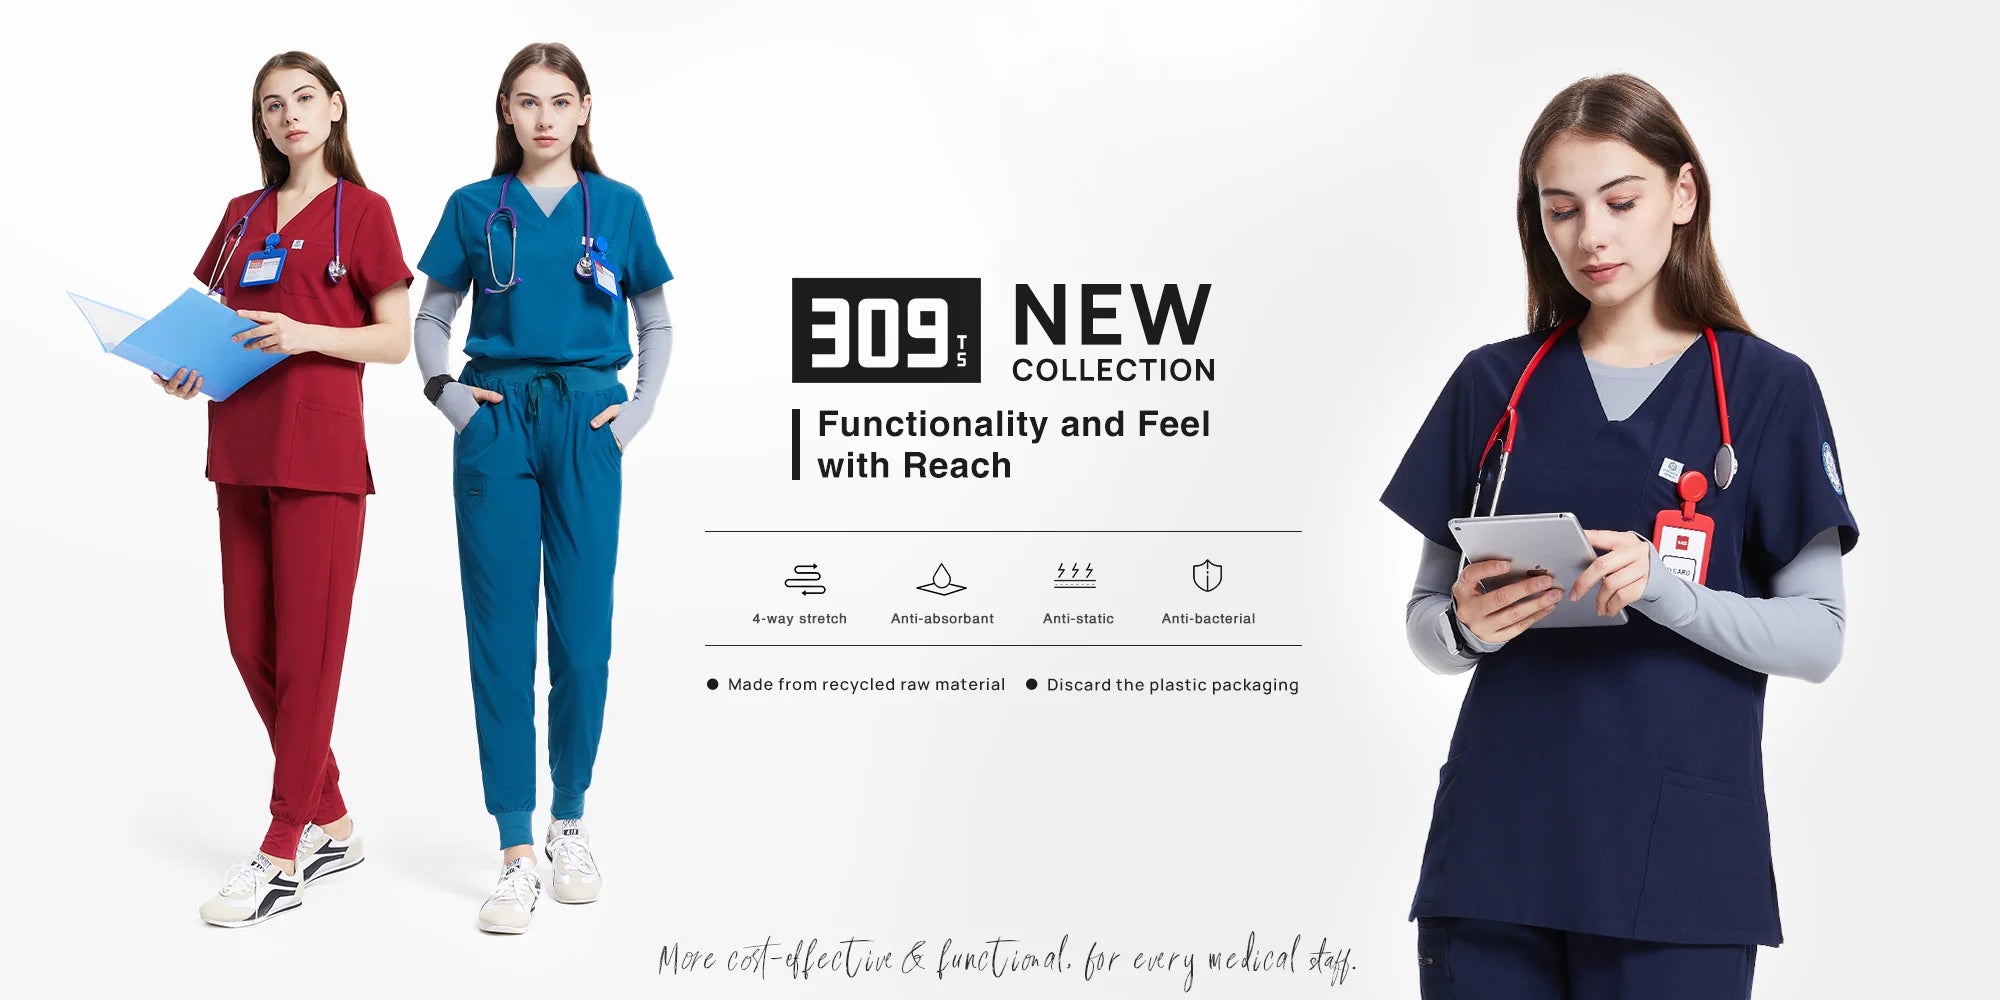 Women's Uniforms World 309TS™ Valiant scrubs set